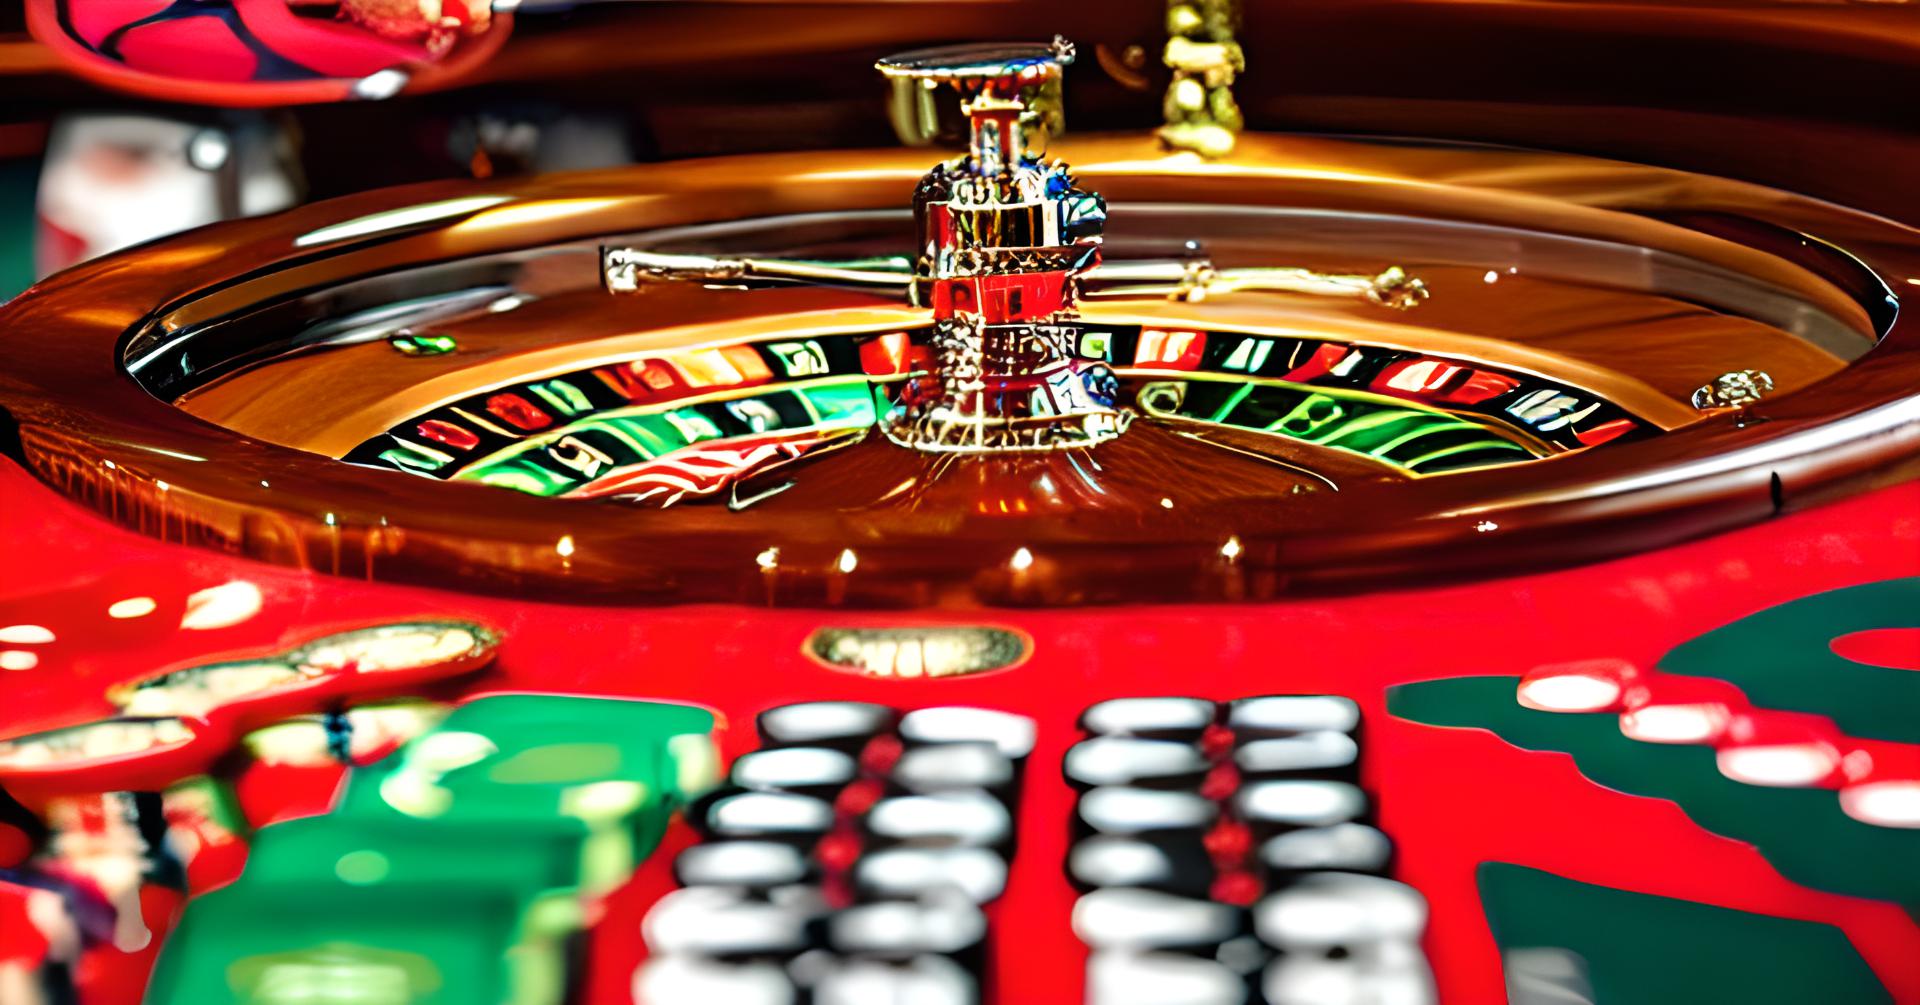 roulette casino en ligne